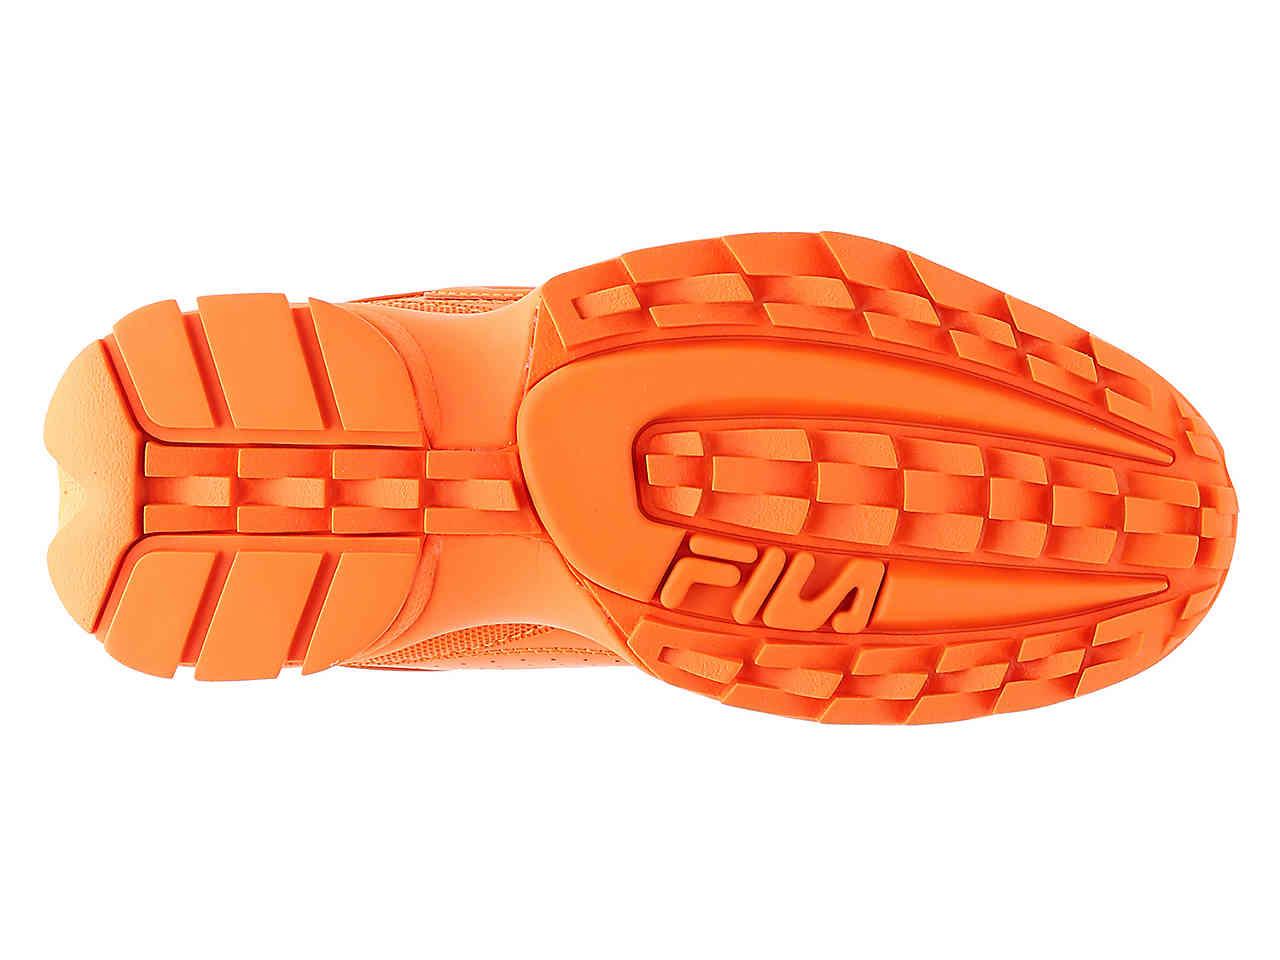 Fila Disruptor II Premium Women's Sneaker 6 B(M) US Orange-Orange-Orange 